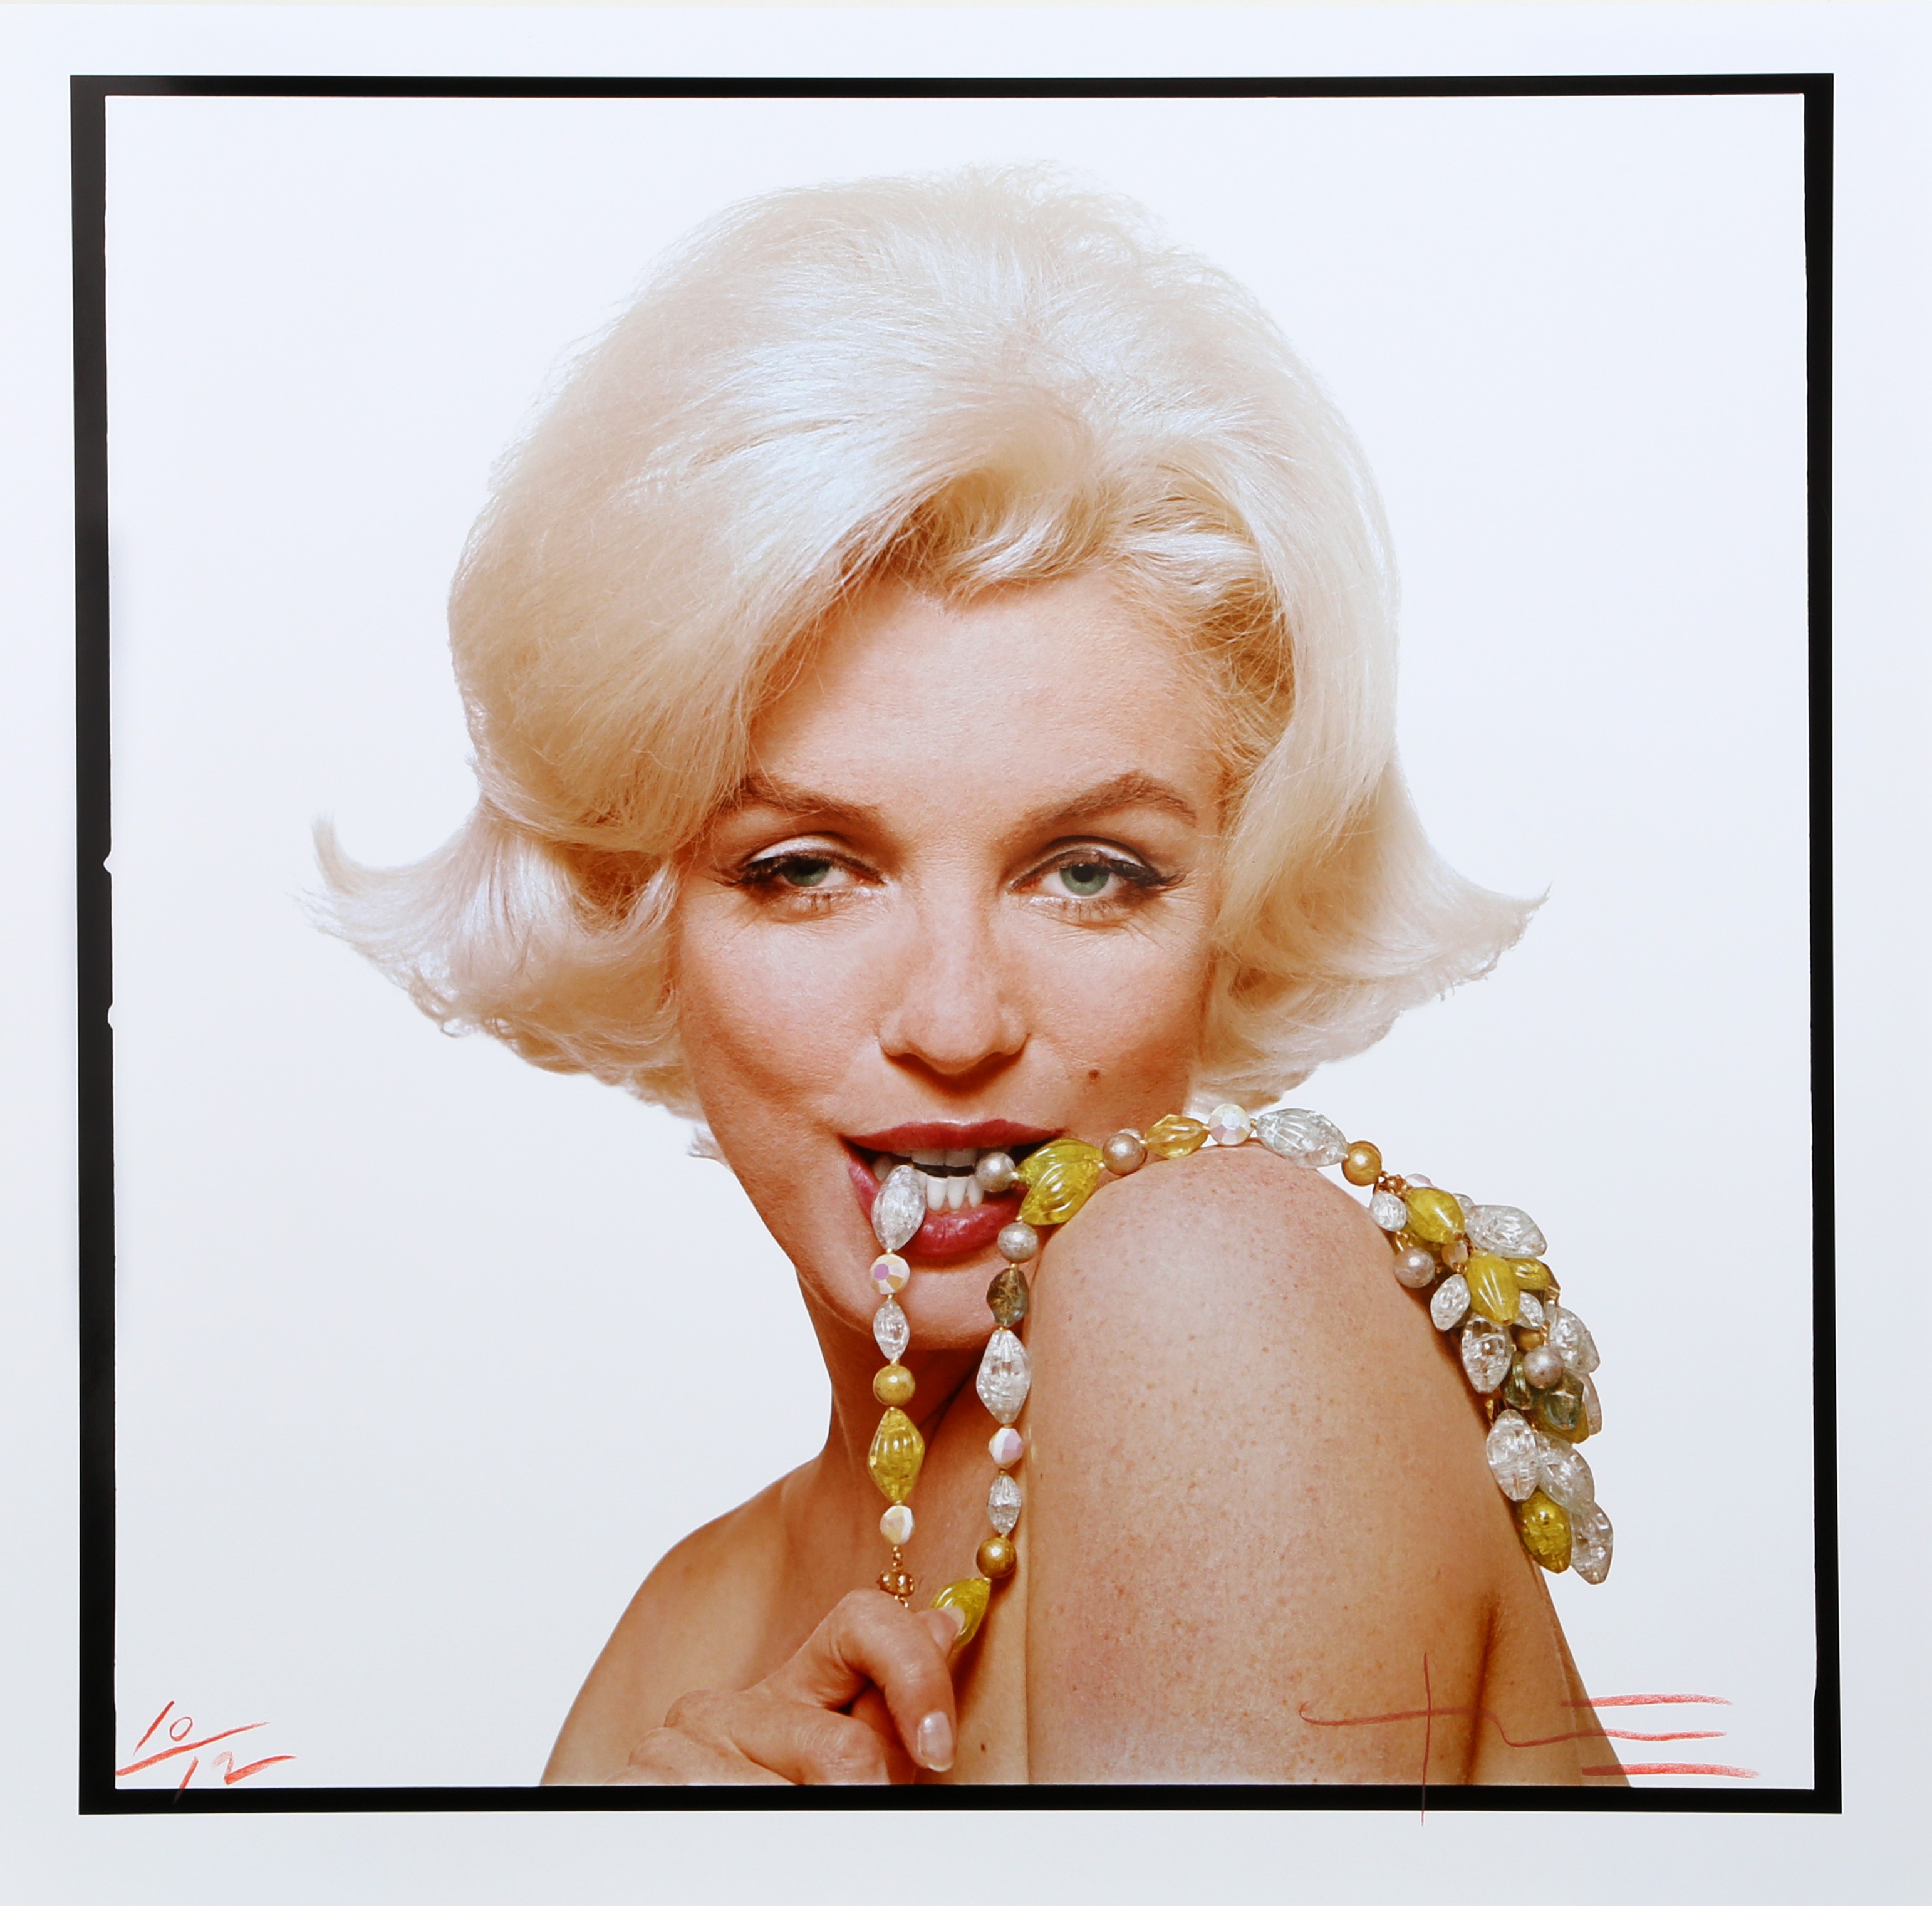 Marilyn Monroe The Last Sitting Portfolio 7 By Bert Stern 1962 Photography Artsper 1164075 6144